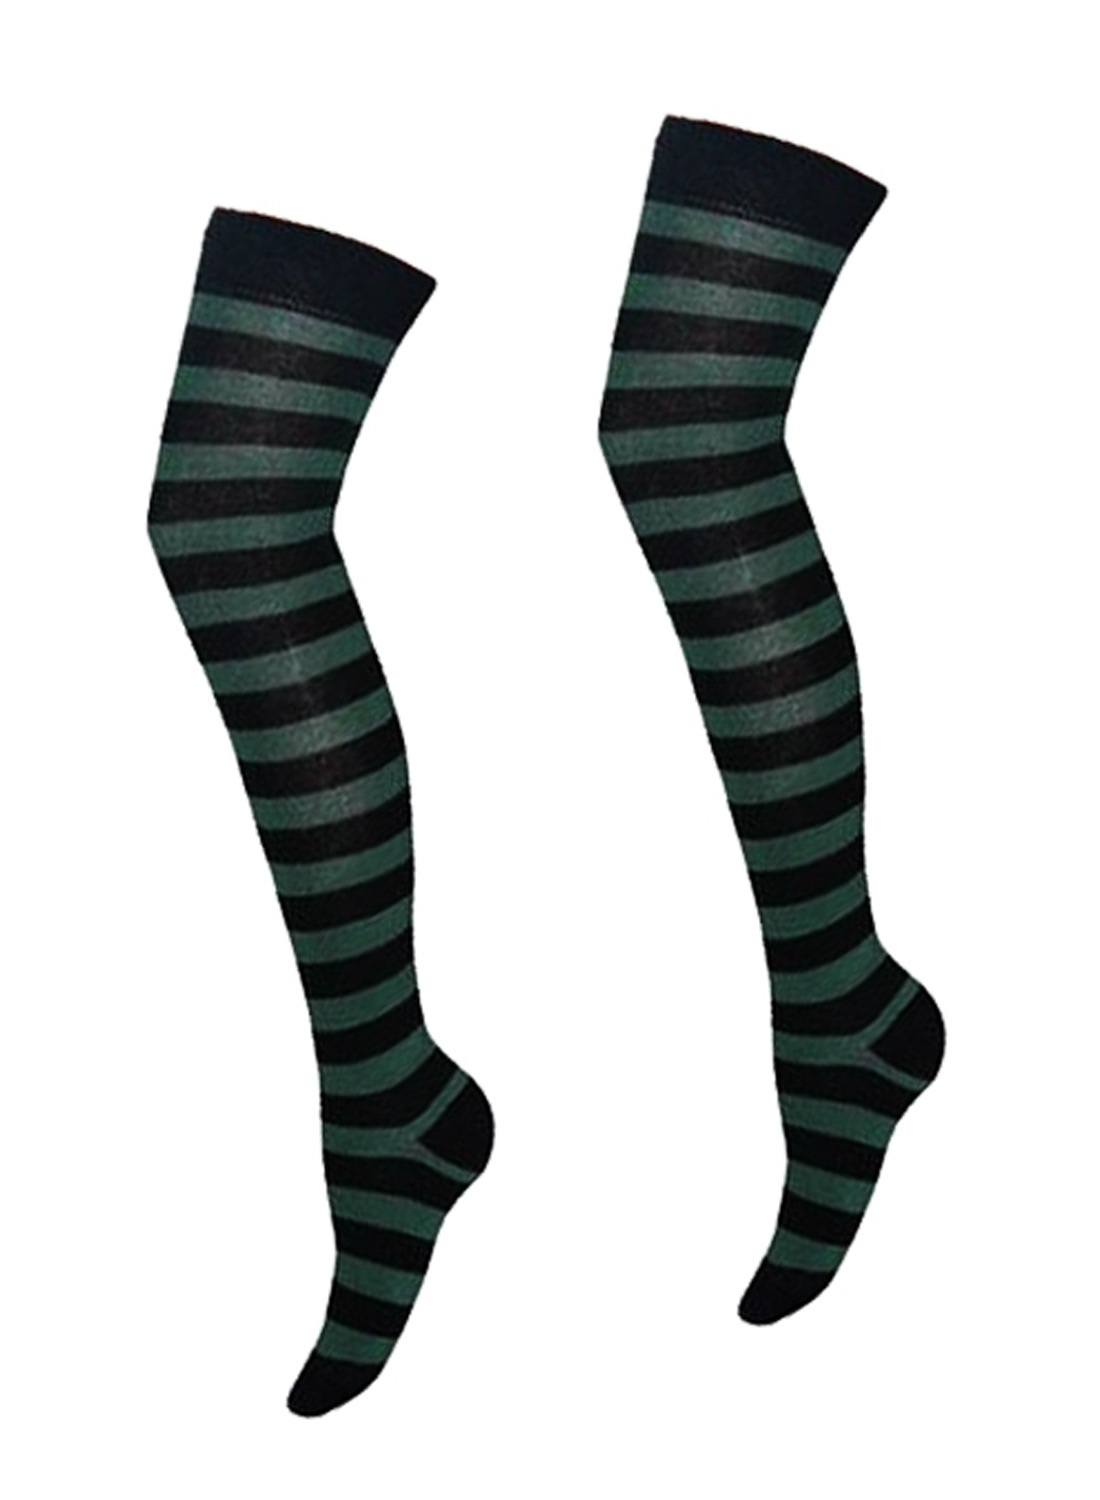 OK Dark Green And Black Socks